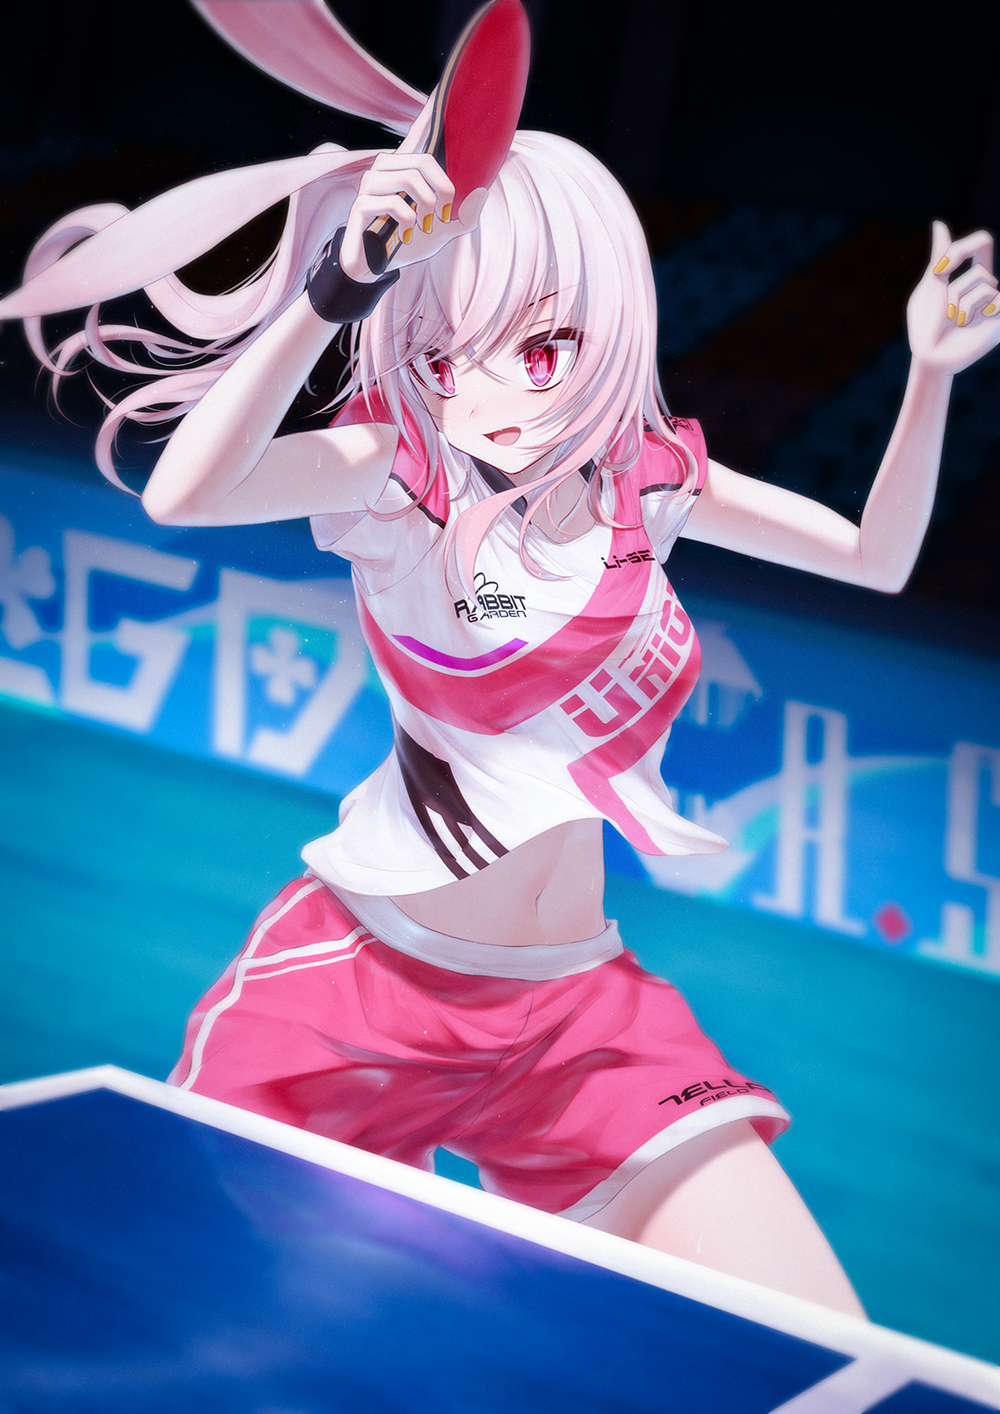 Anime 1000x1414 anime anime girls digital art artwork 2D portrait display Bae.C bunny girl tennis